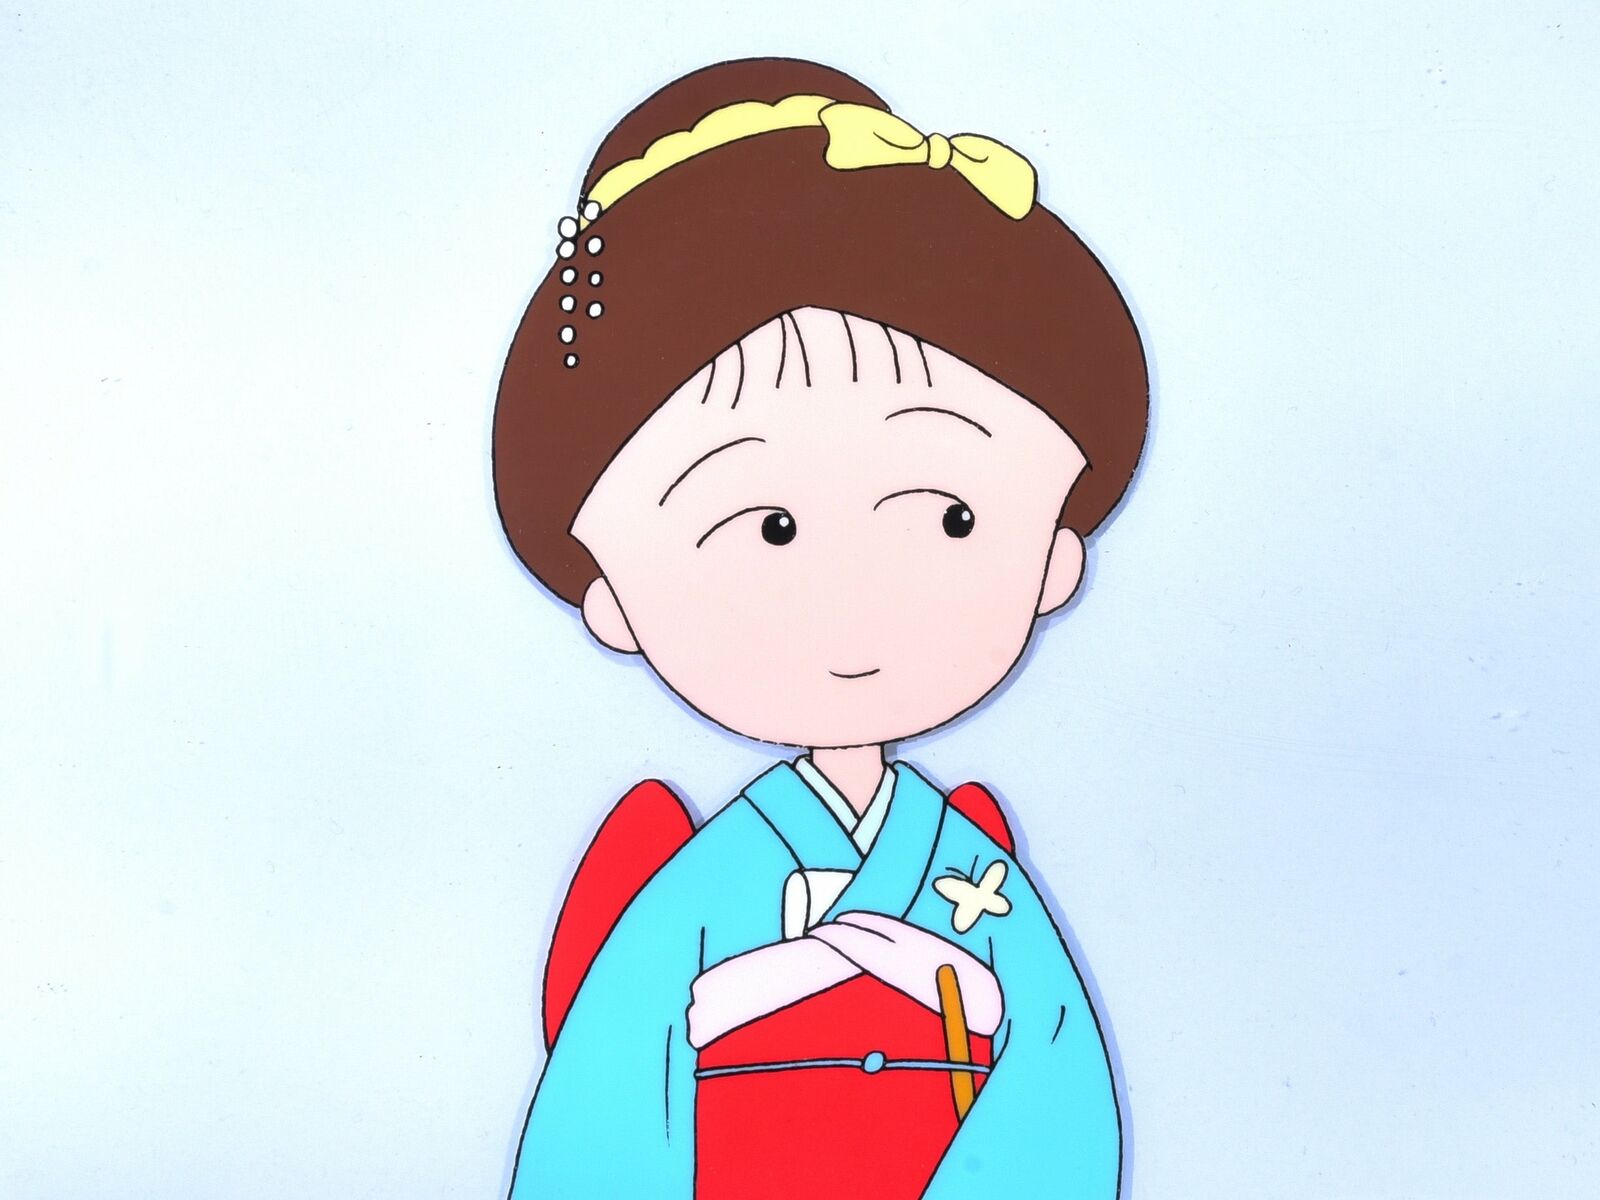 Chibi Maruko-chan - Girl in Kimono Original Japanese Animation Production cel